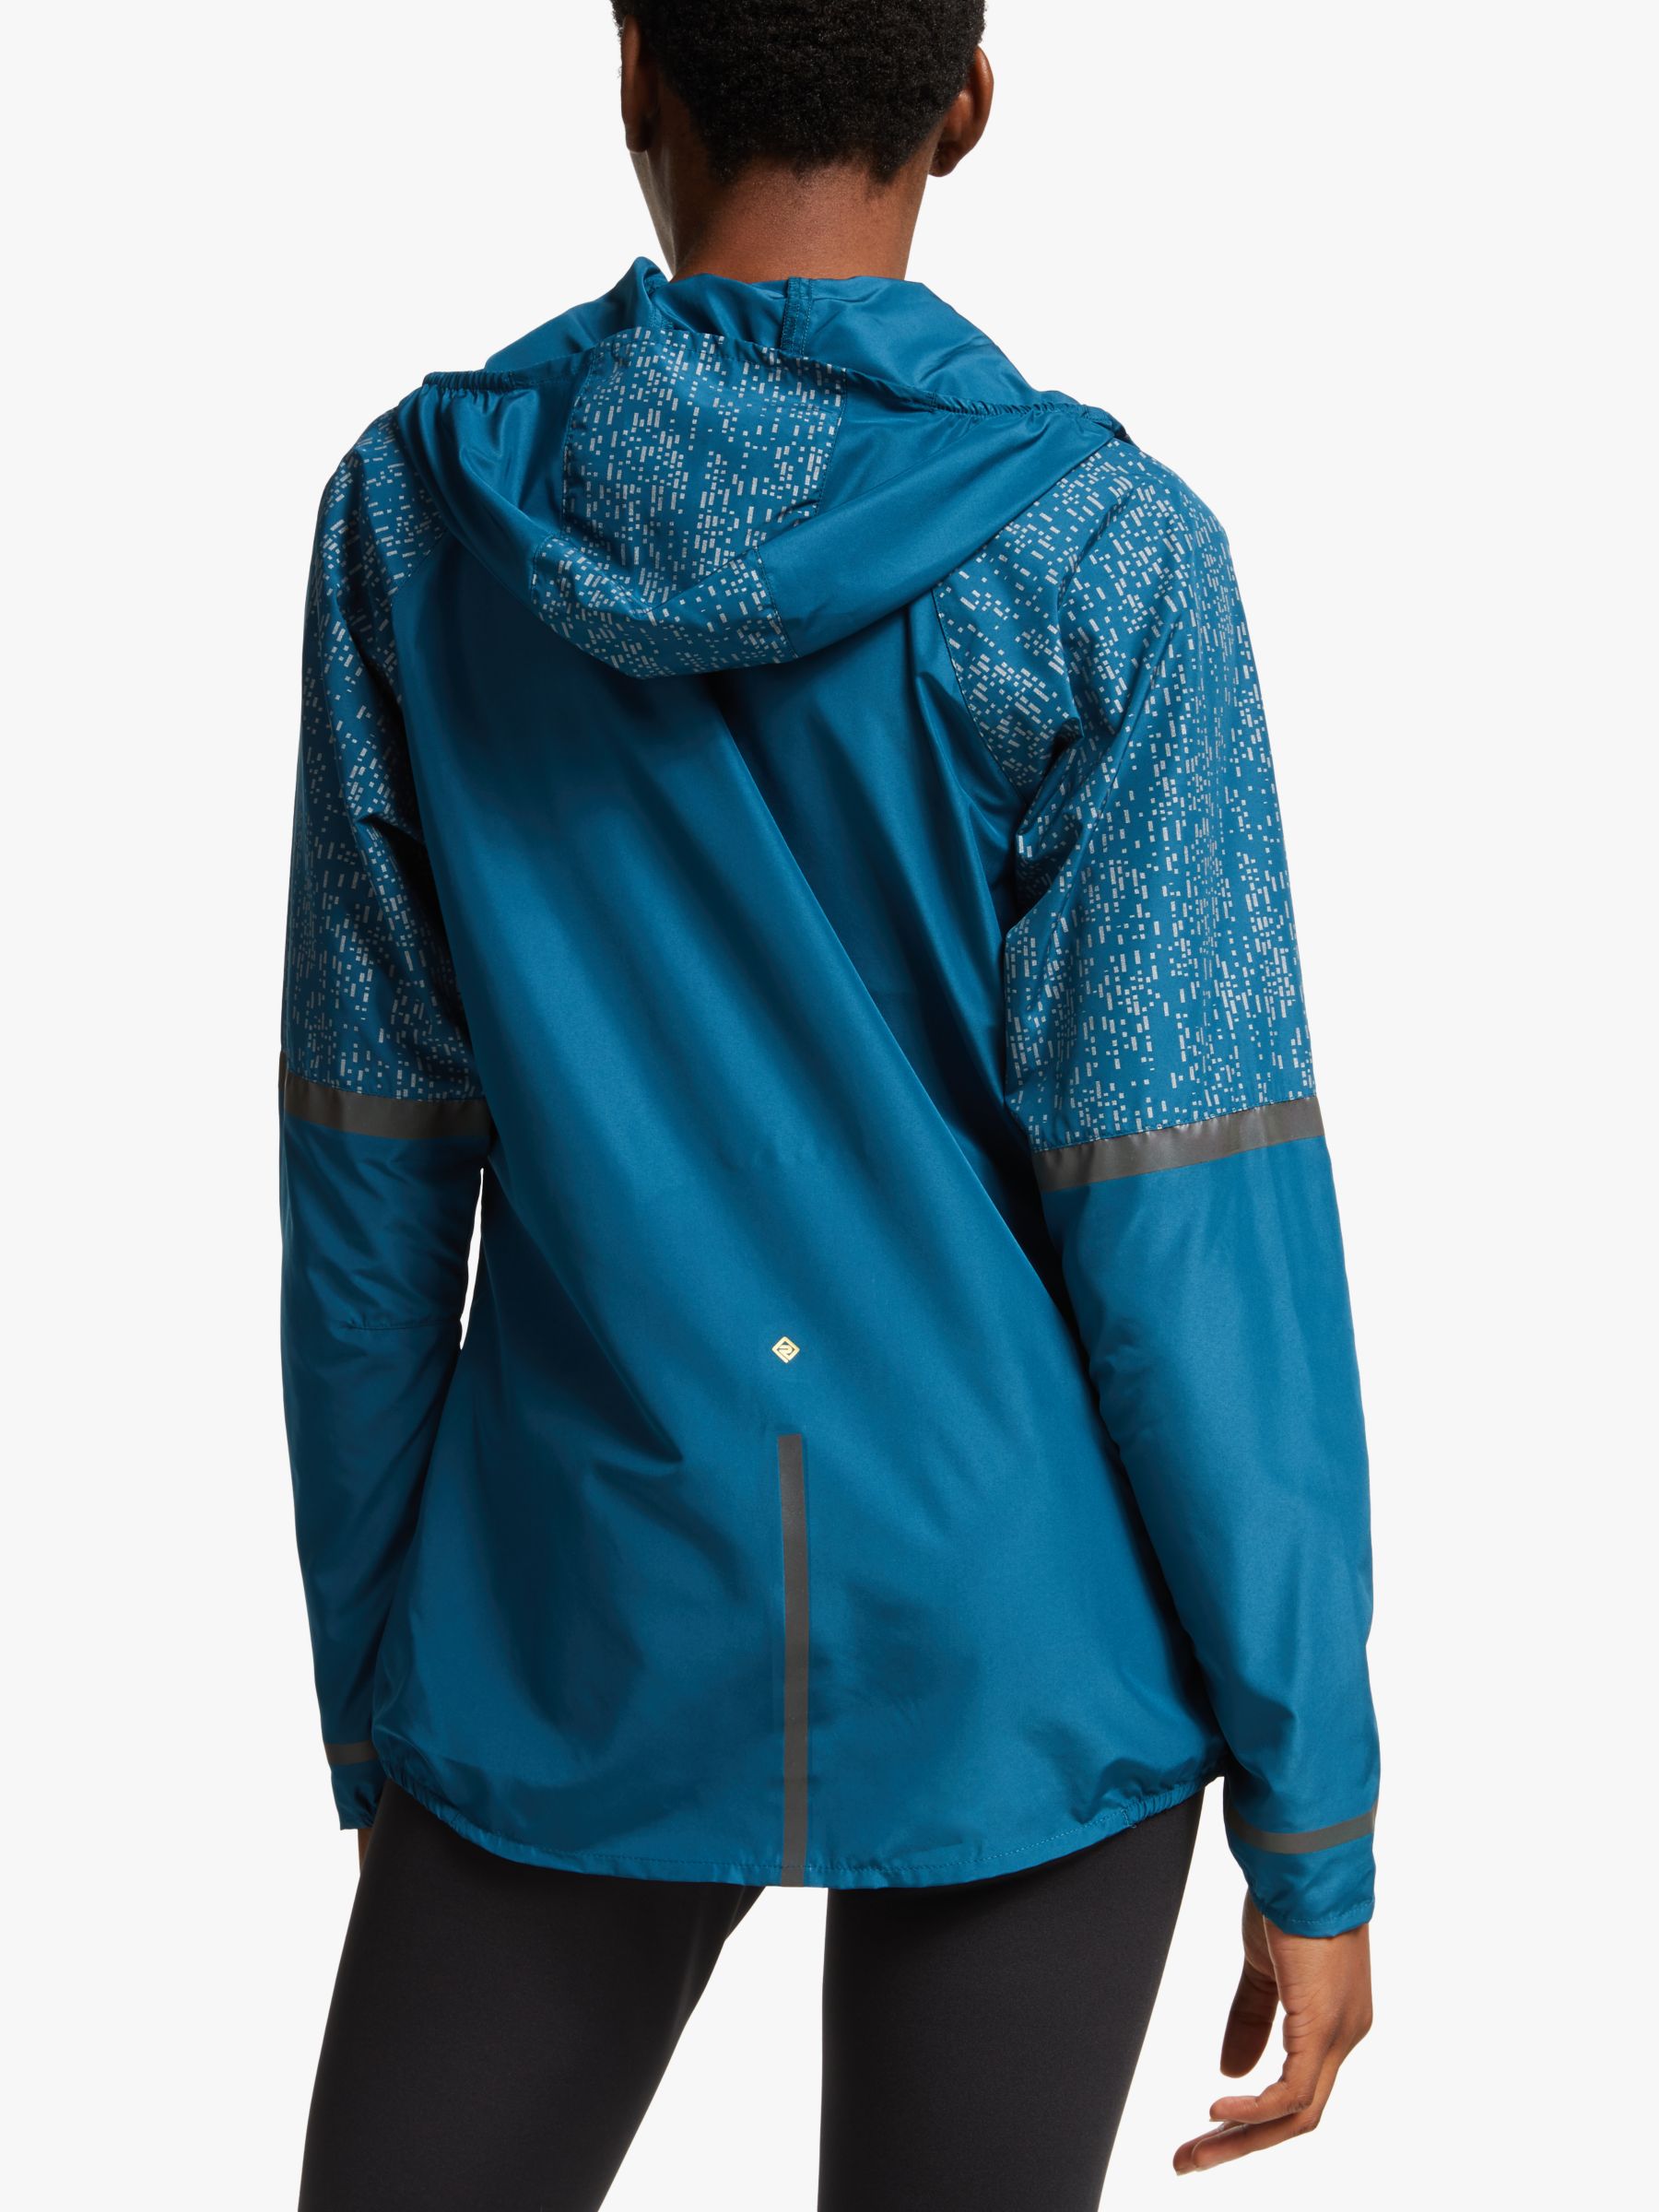 Ronhill Life Nightrunner Women's Running Jacket, Legion Blue/Reflect, 8